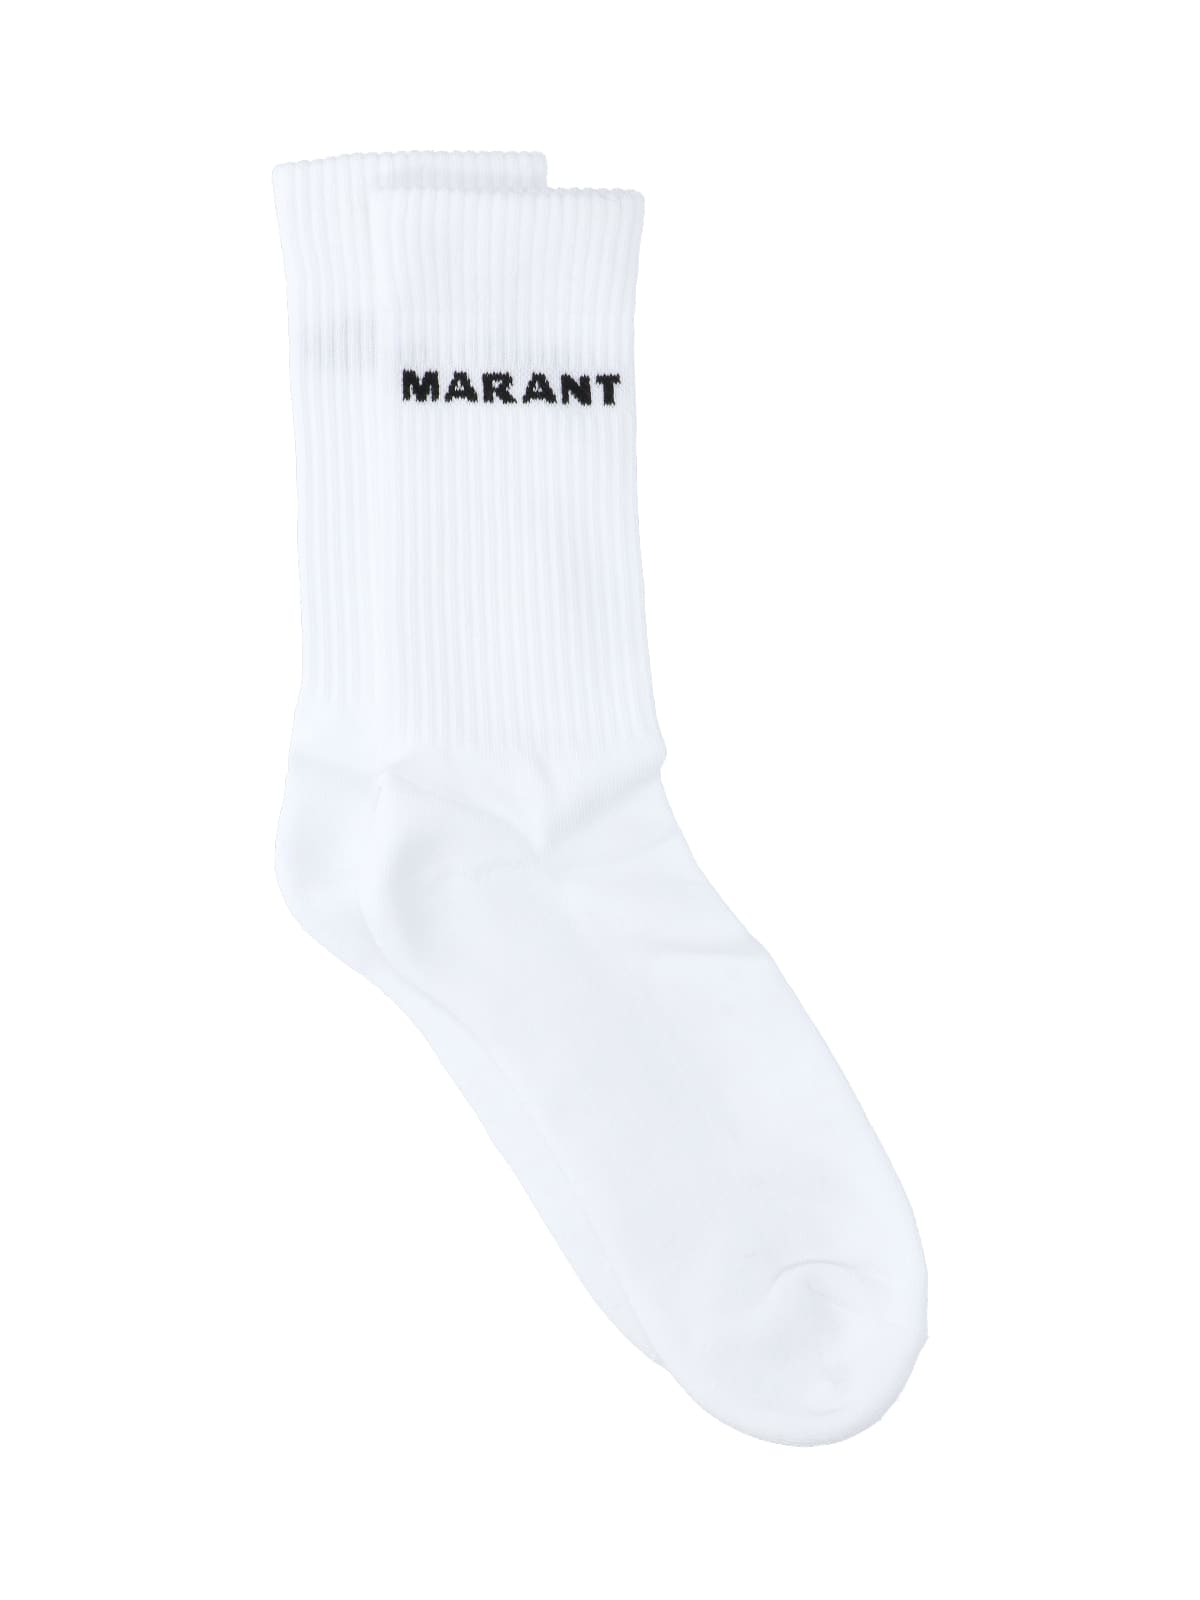 Isabel Marant Socks